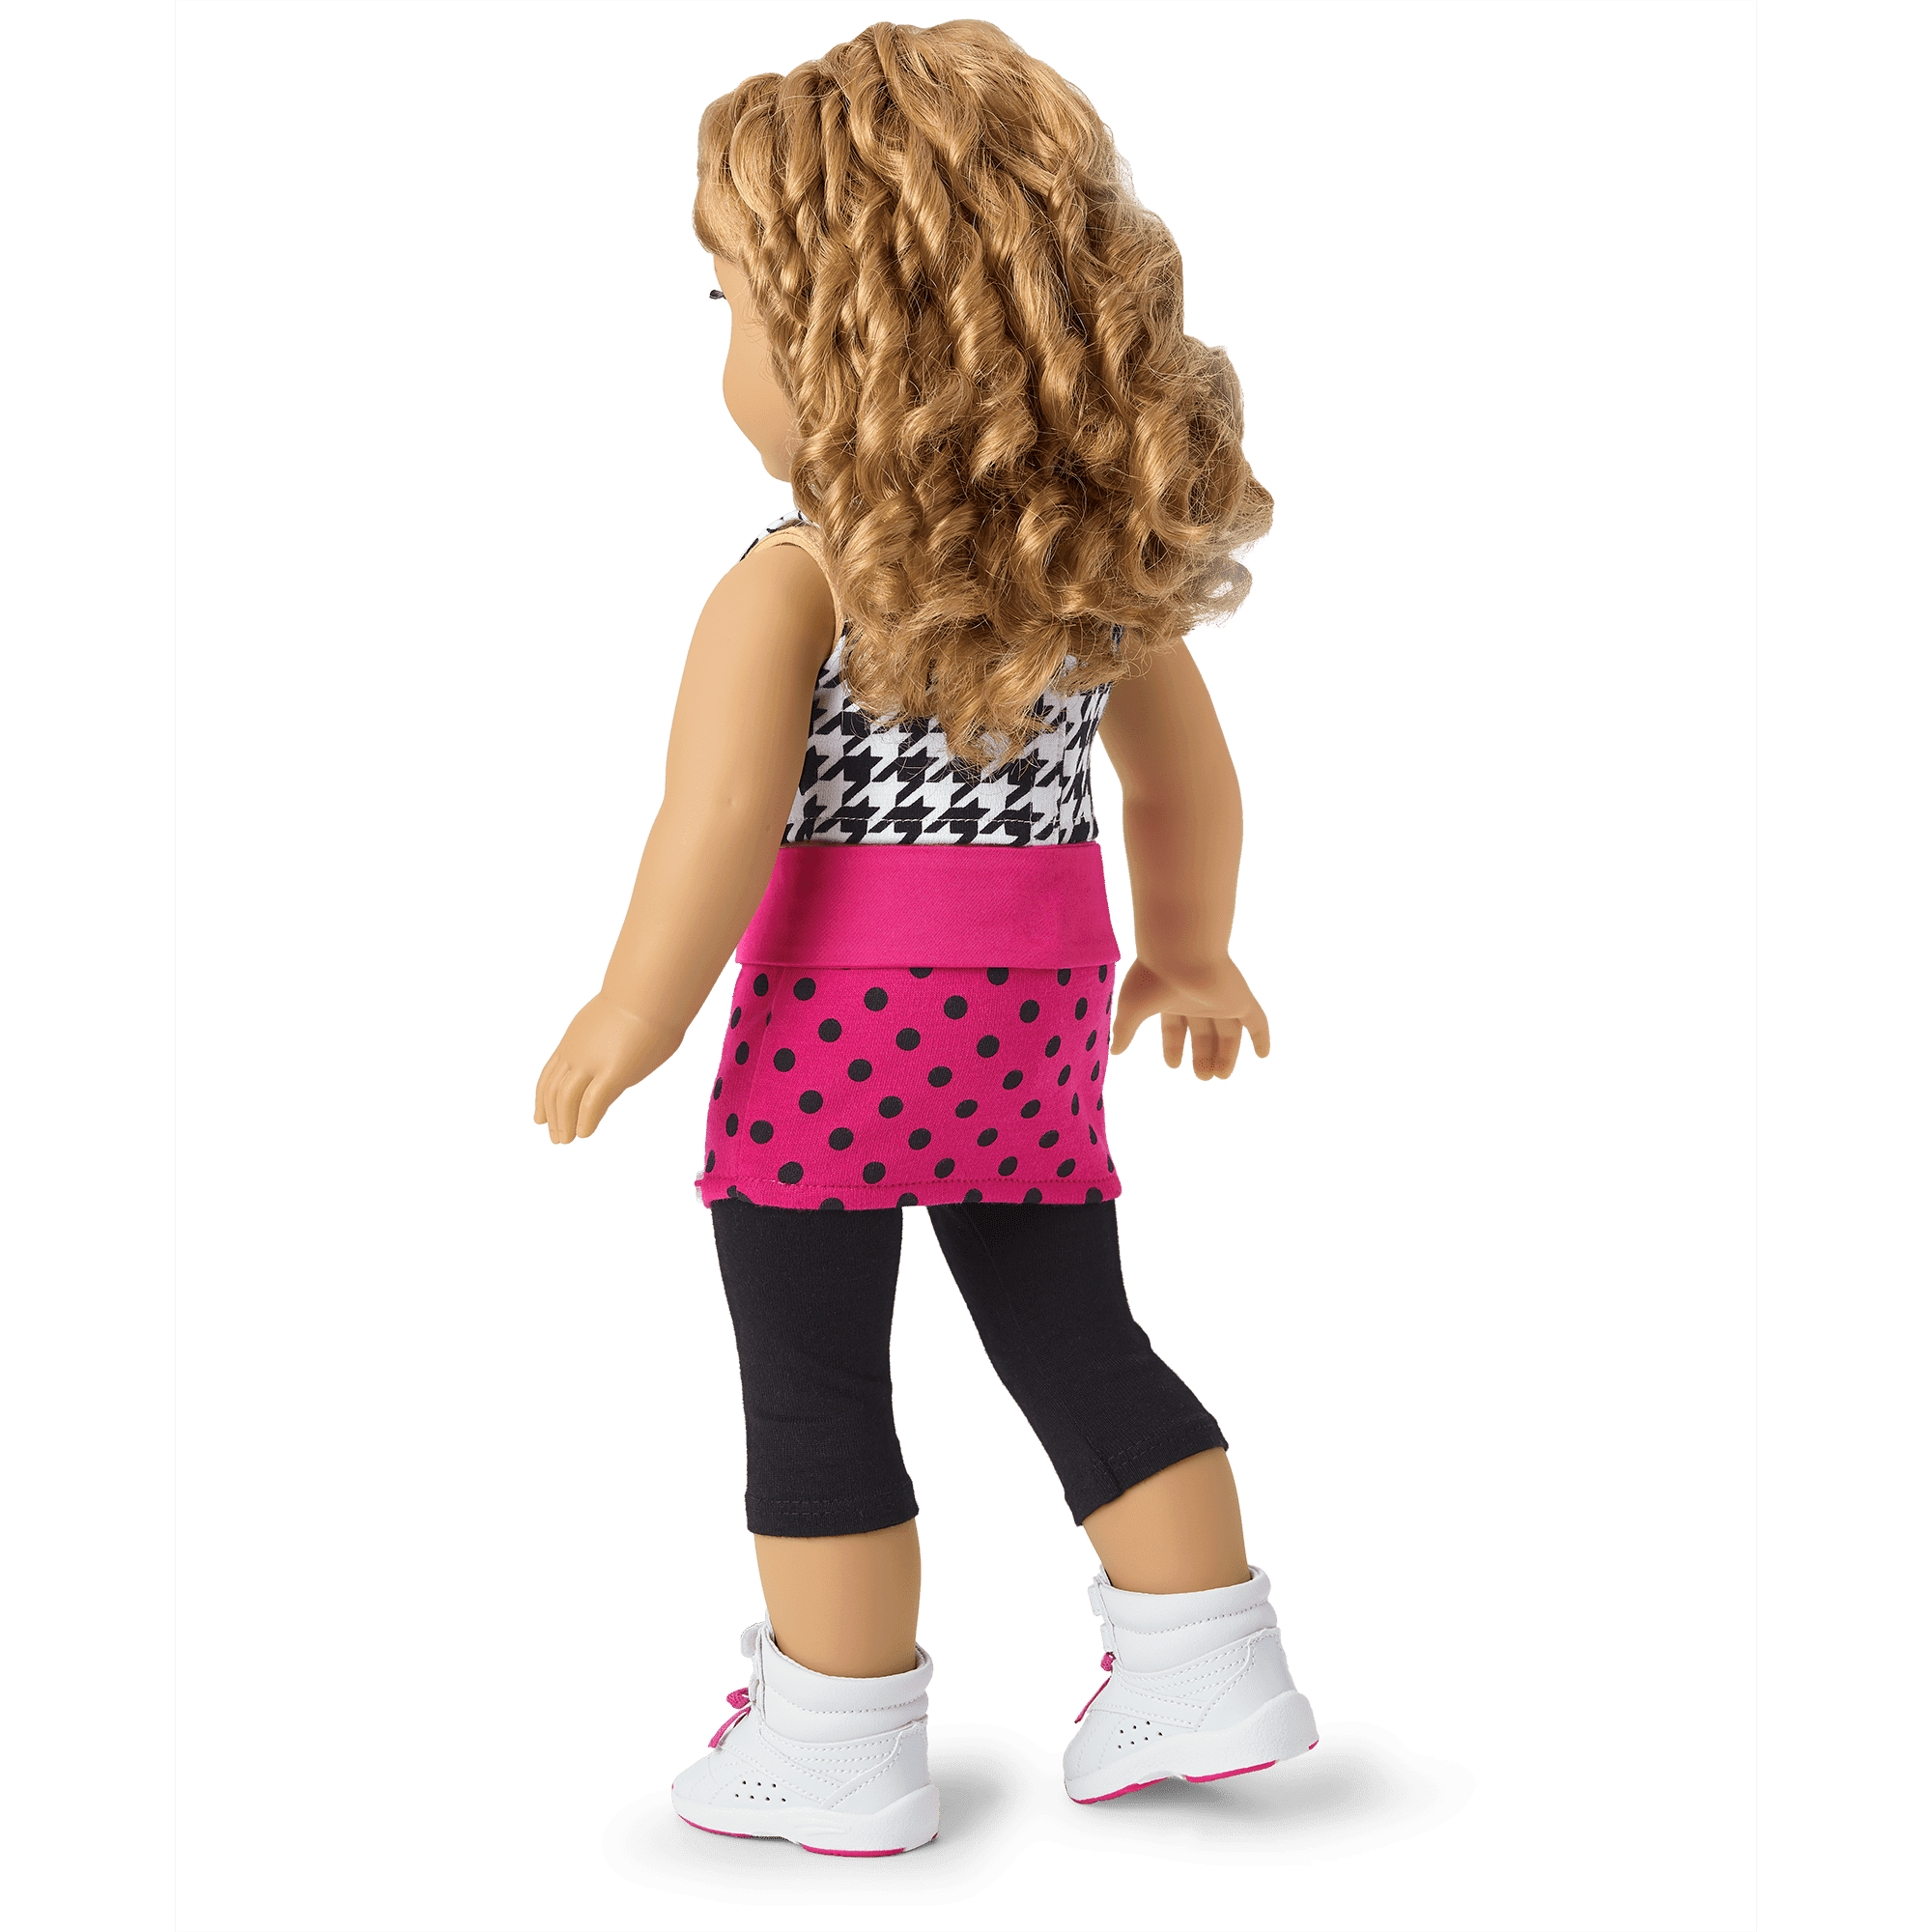 Courtney’s™ Skirt Set for 18-inch Dolls